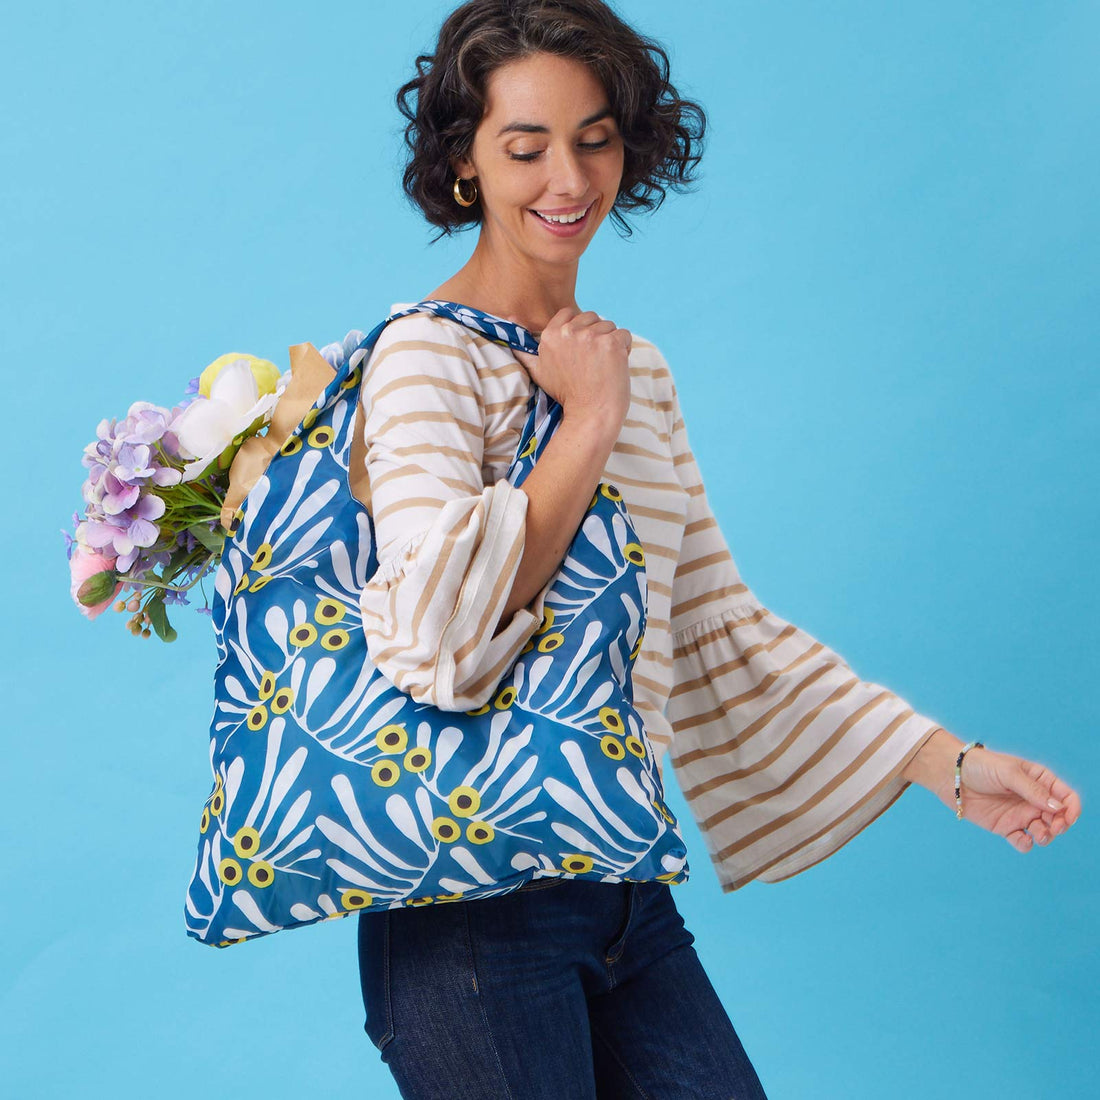 Francoise Blu Bag Reusable Shopping Bag - Machine Washable Reusable Shopping Bag - rockflowerpaper